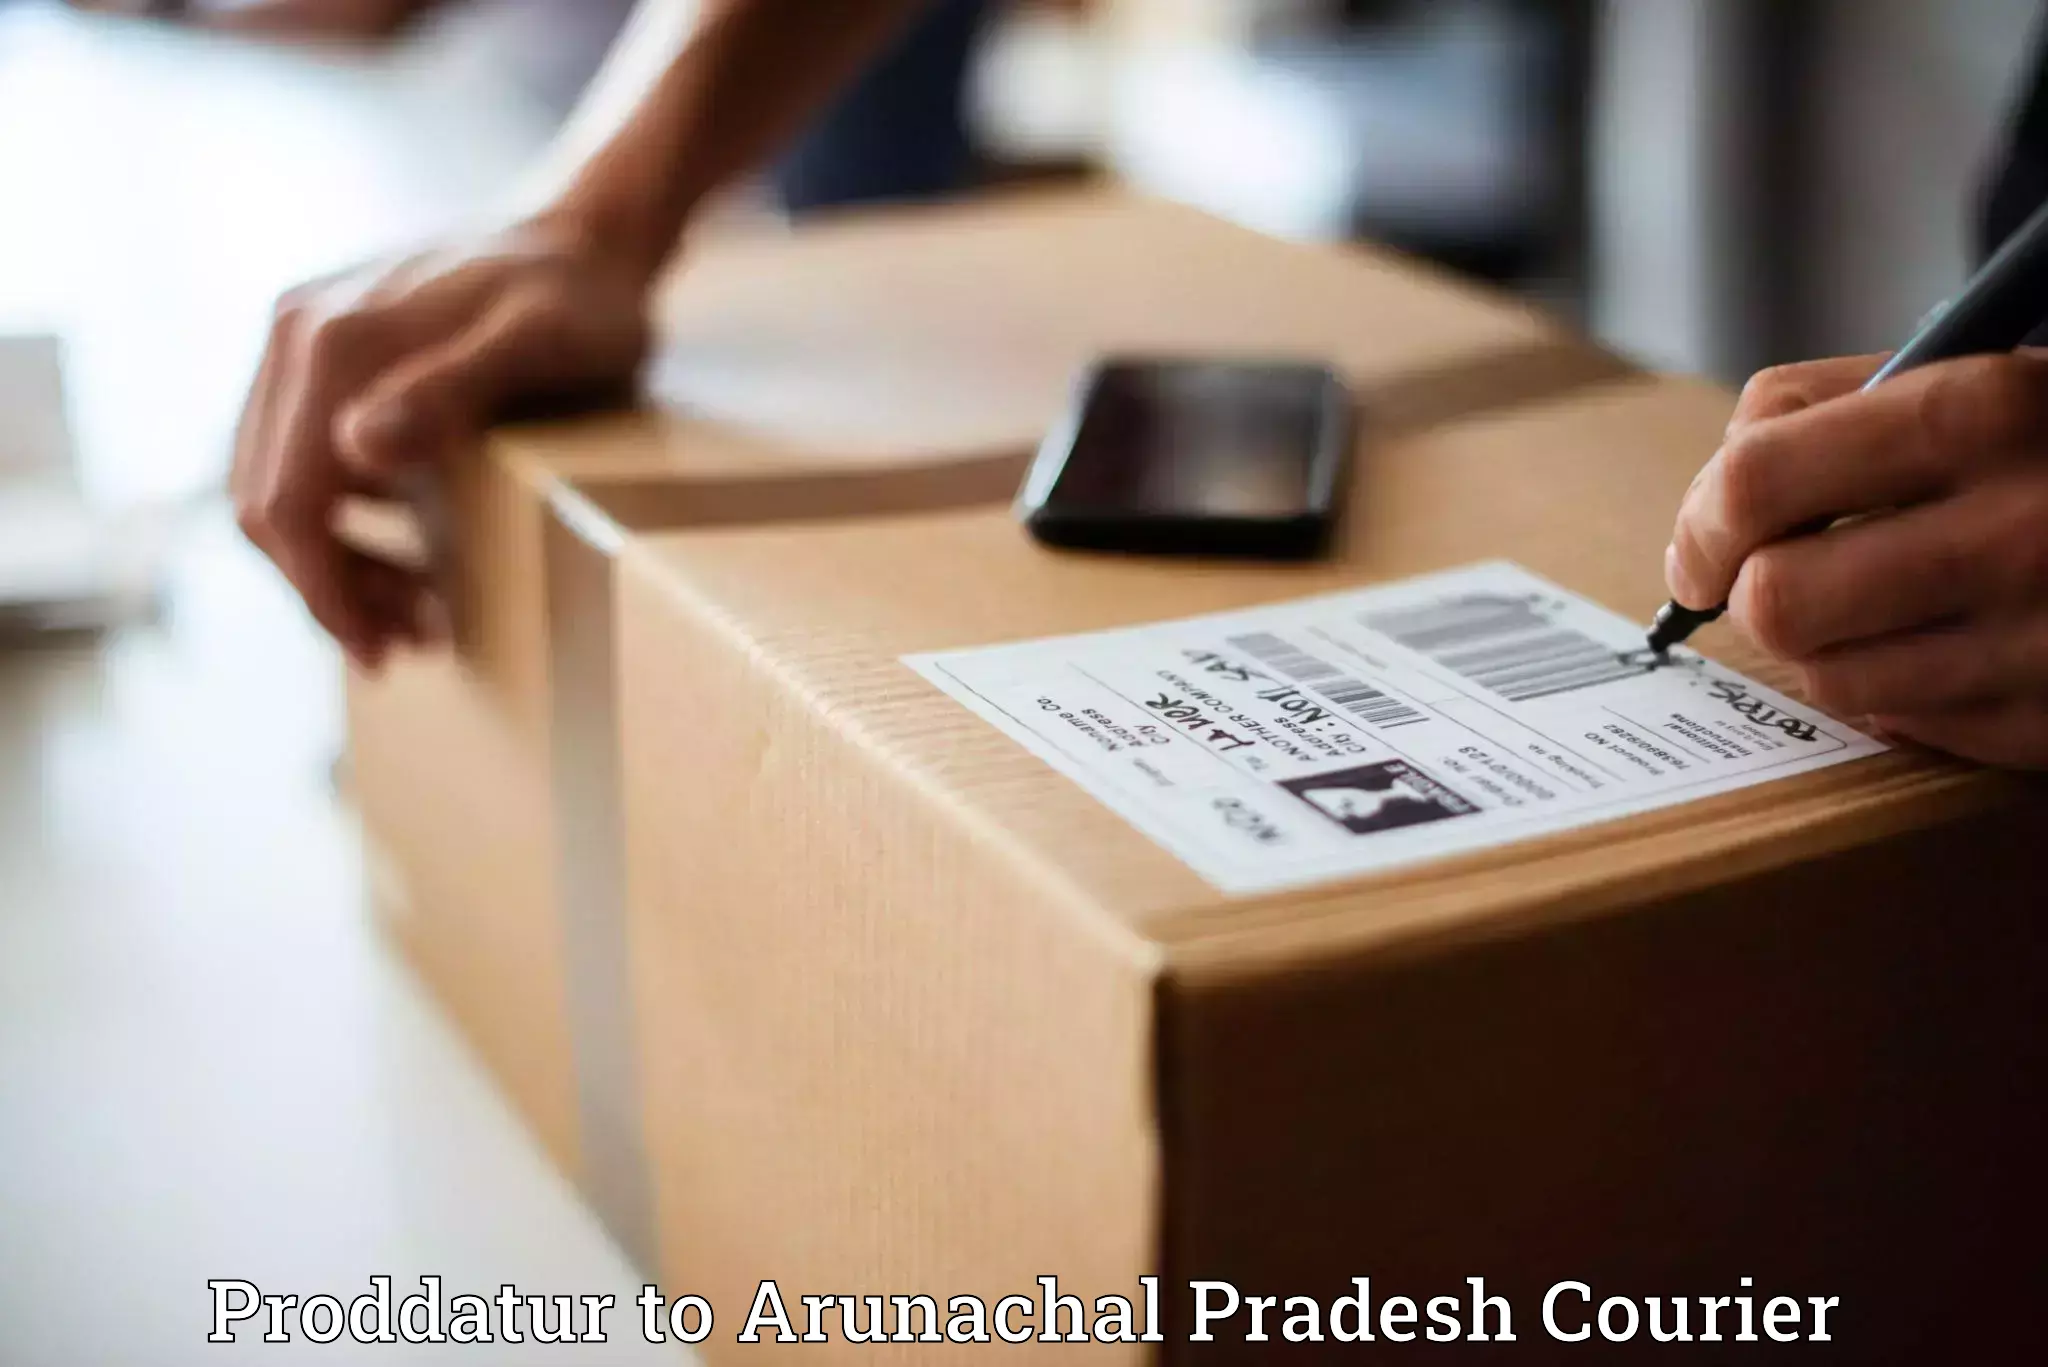 Pharmaceutical courier Proddatur to Arunachal Pradesh